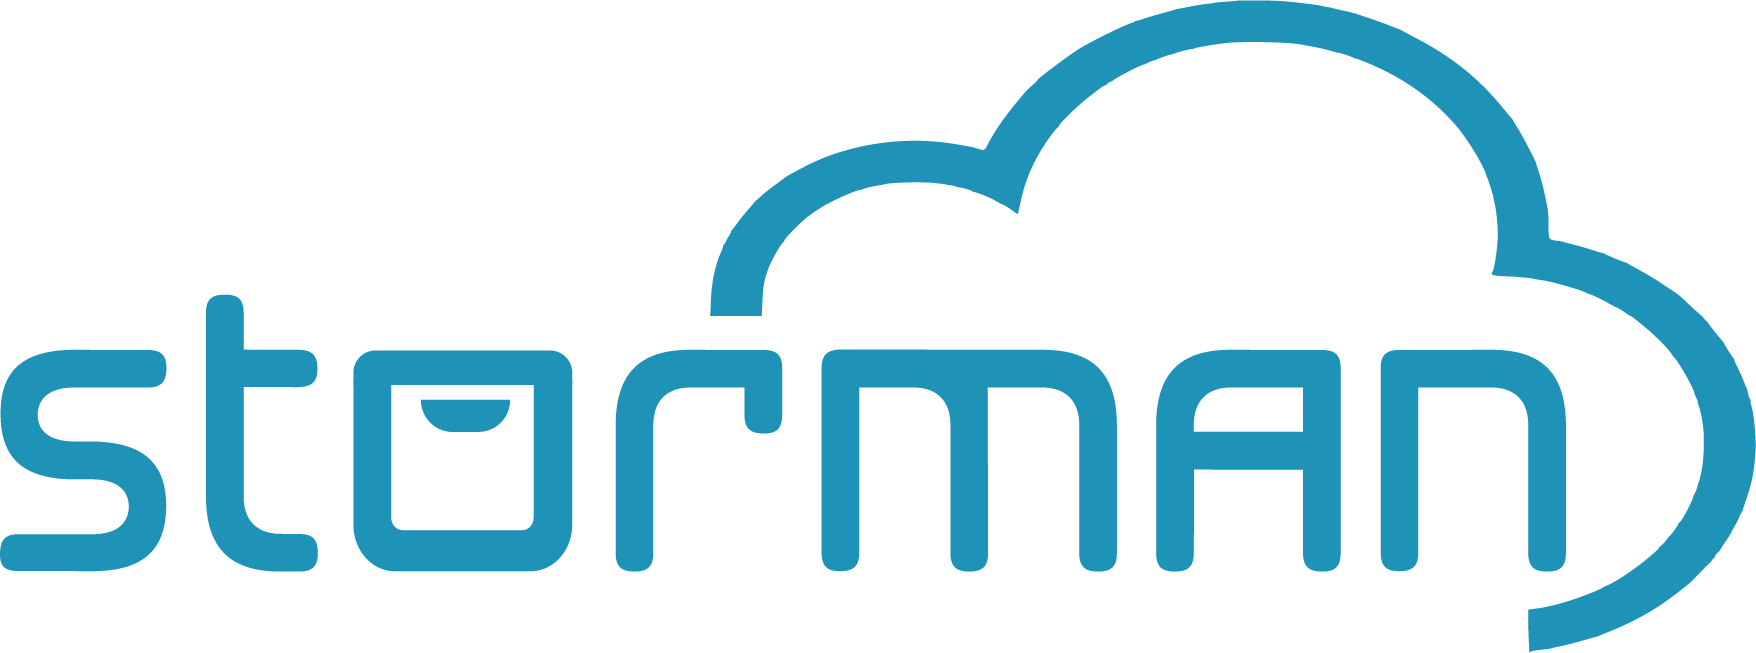 Storman Cloud Logo